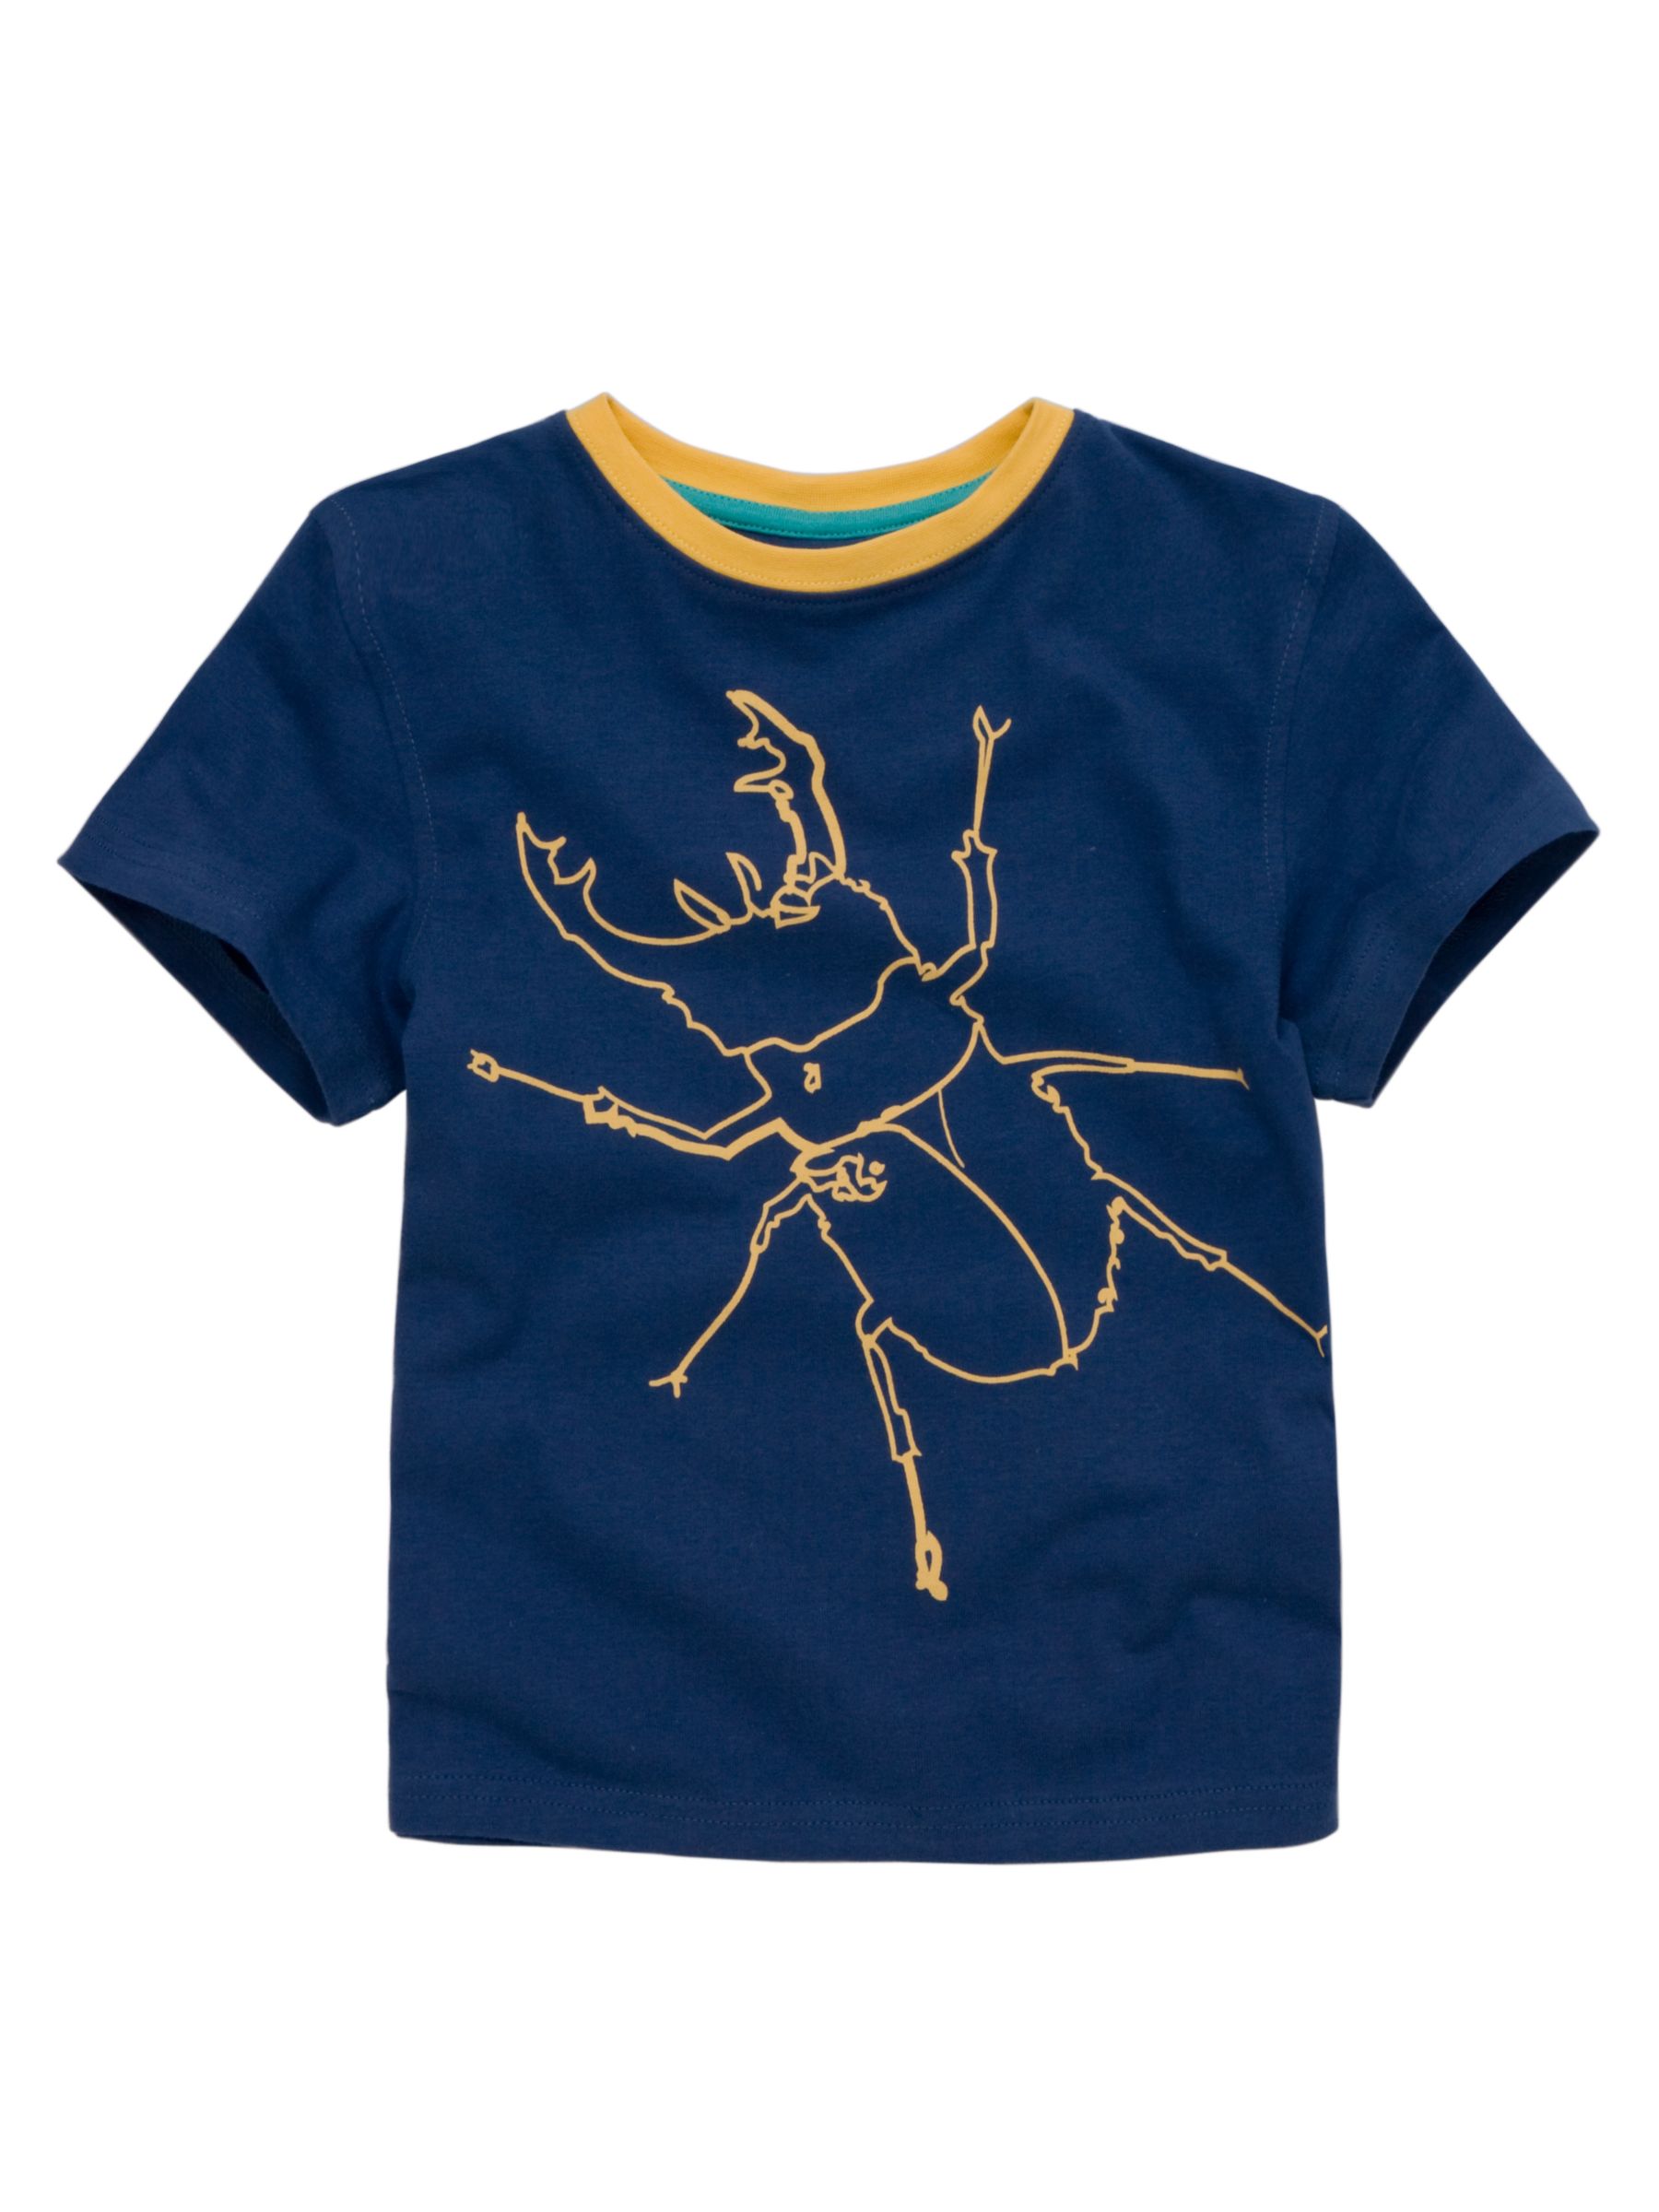 John Lewis Boy Beetle T-Shirt, Navy blue, 11 years